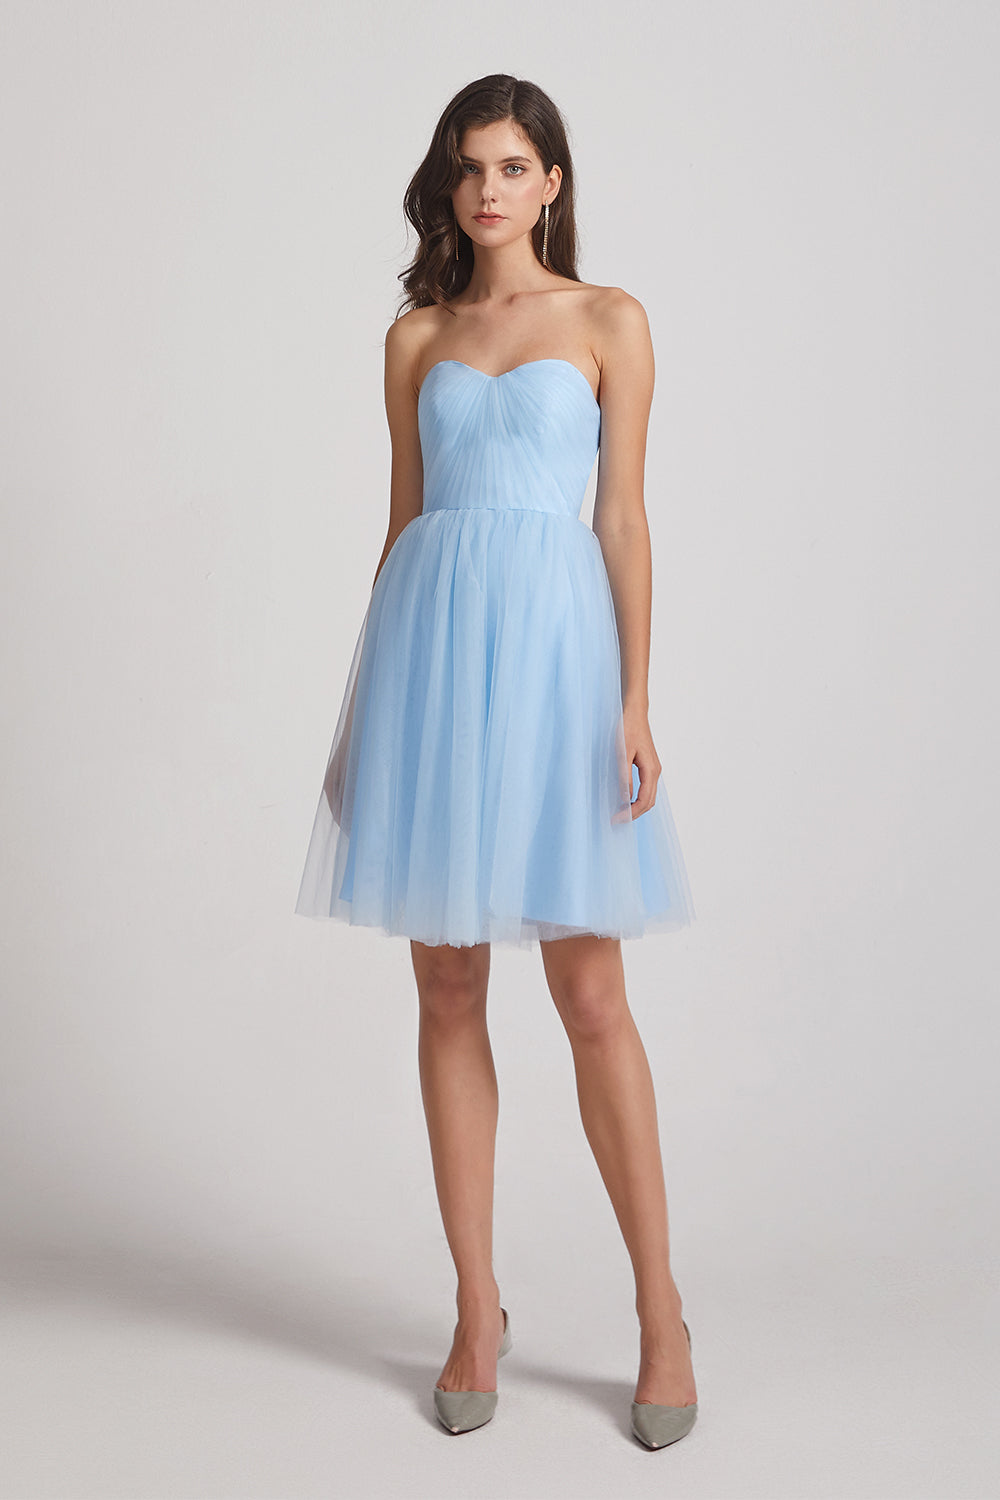 light blue strapless sweatheart tulle bridesmaids dress